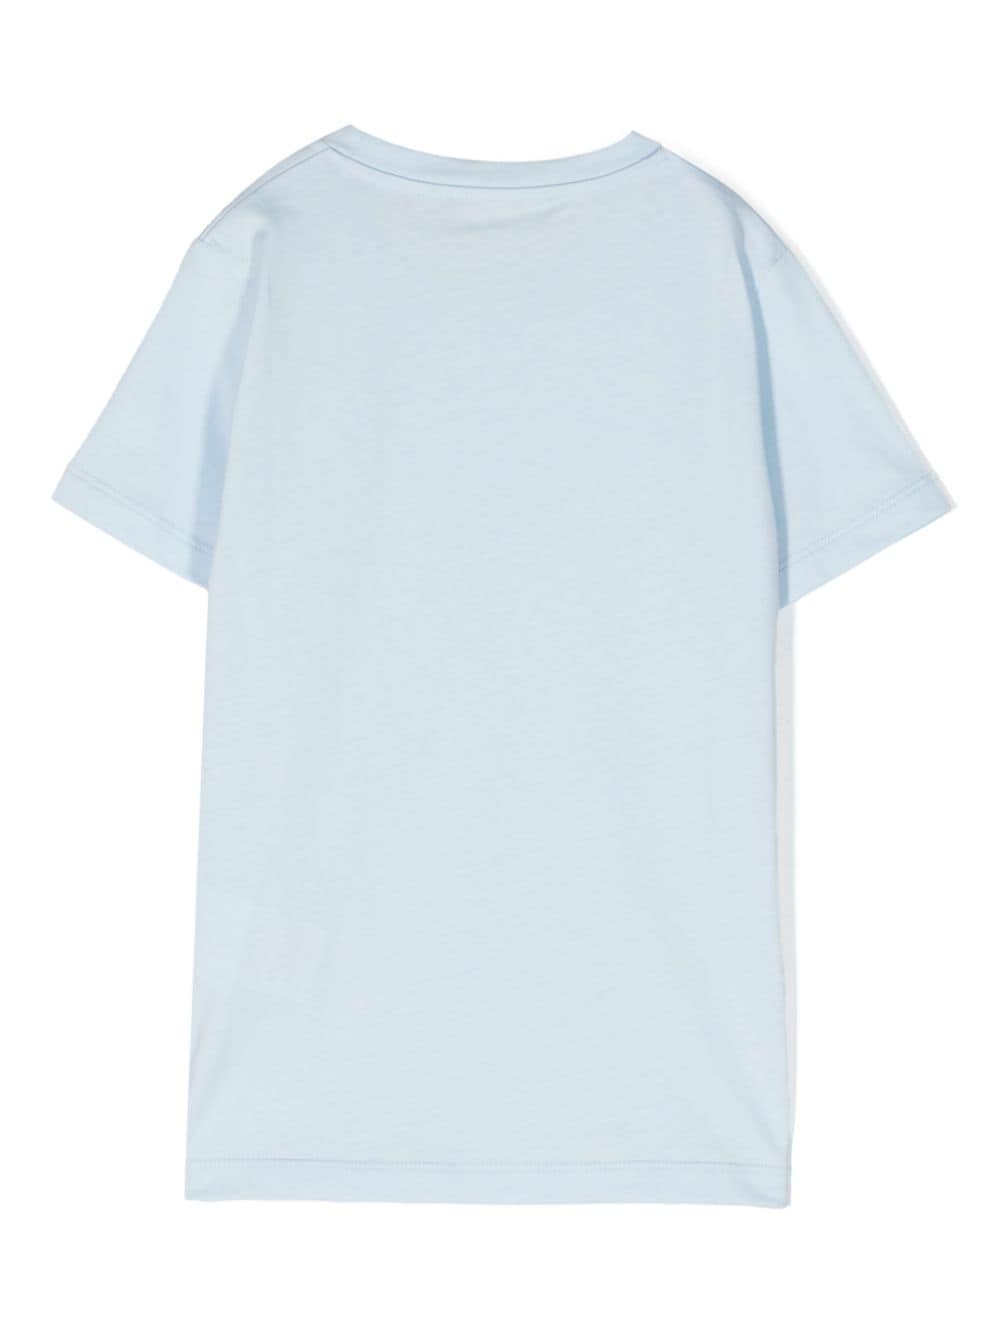 T-shirt unisexe bleu clair